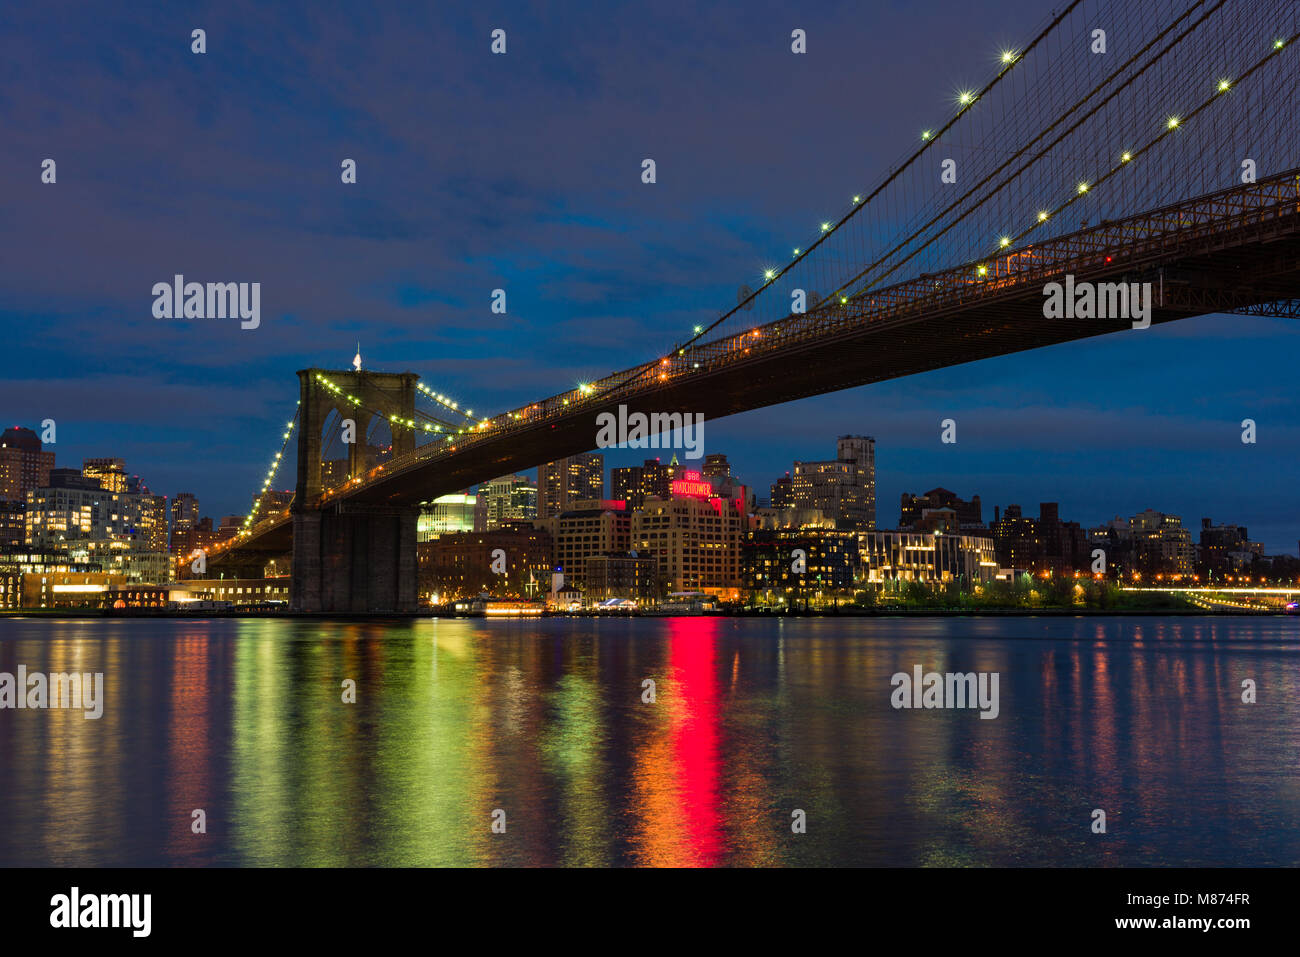 Le Pont de Brooklyn Brooklyn et illuminé à la tombée de la nuit avec les reflets dans l'East River, New York, USA Banque D'Images